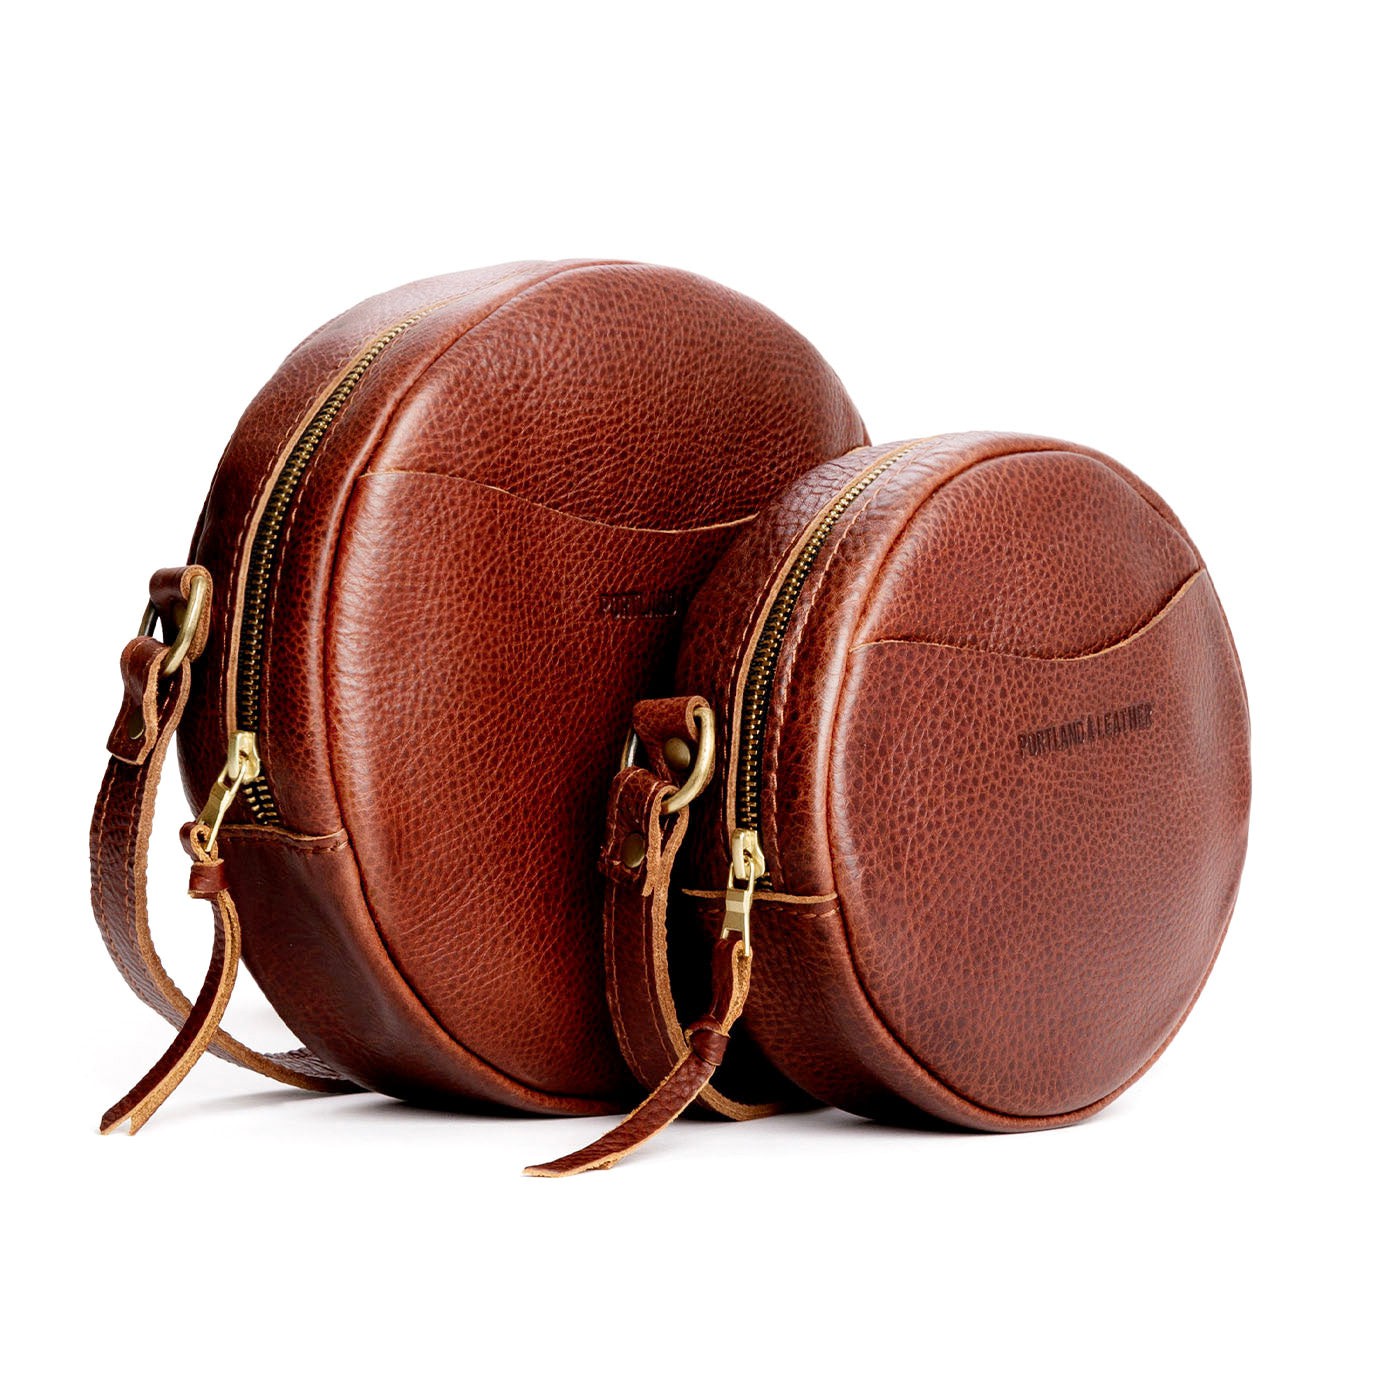 All Color: Nutmeg | leather handmade circle purse